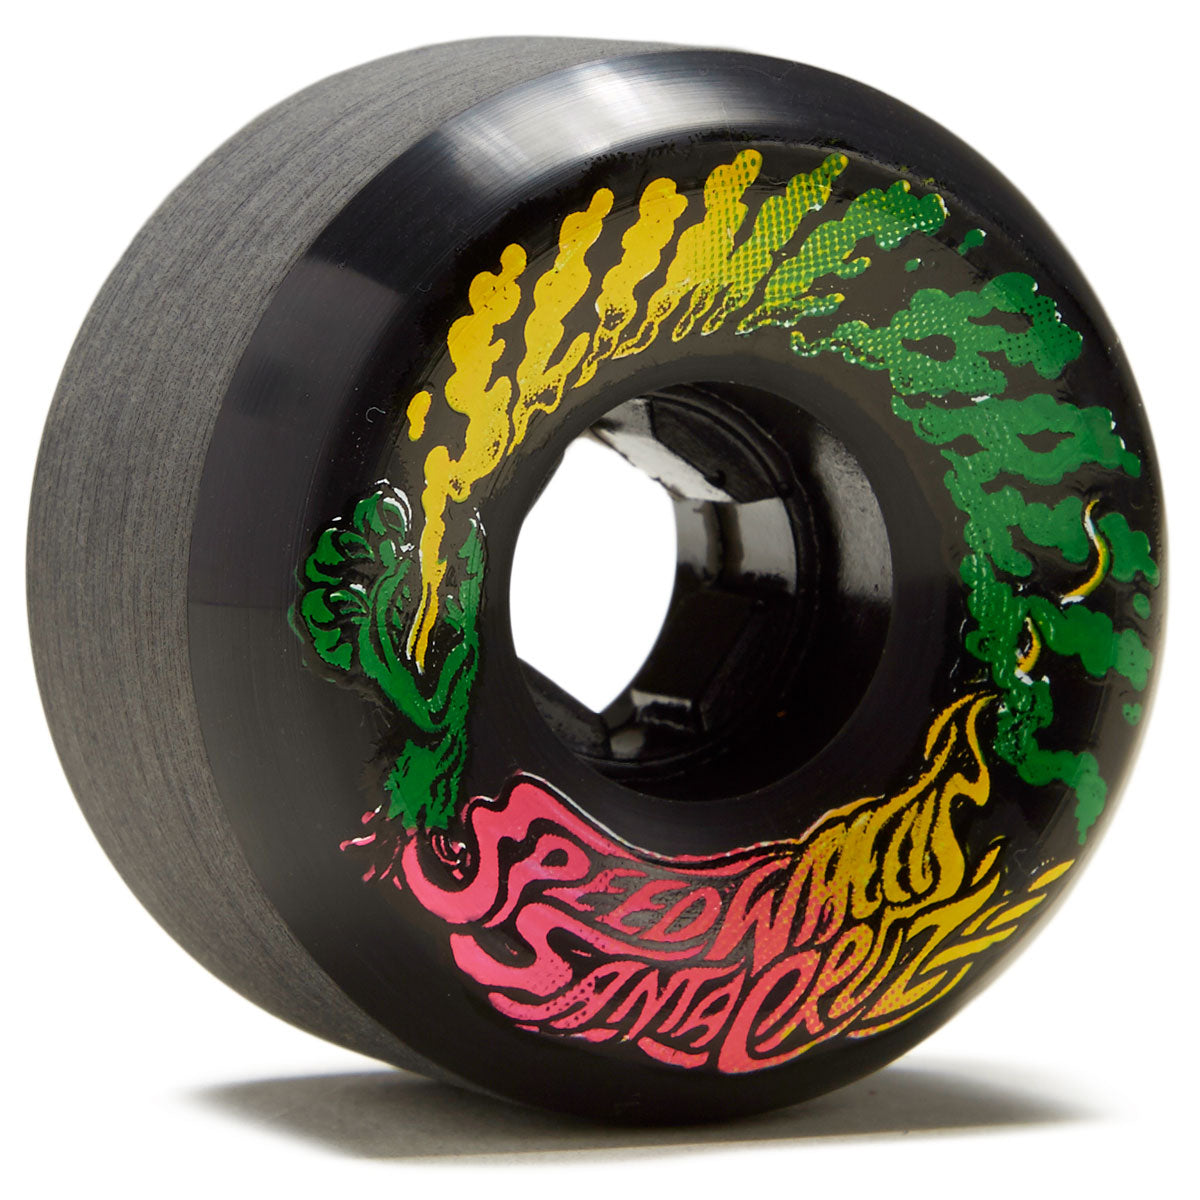 Slime Balls Vomit Mini 97a Skateboard Wheels - Black - 56mm image 1